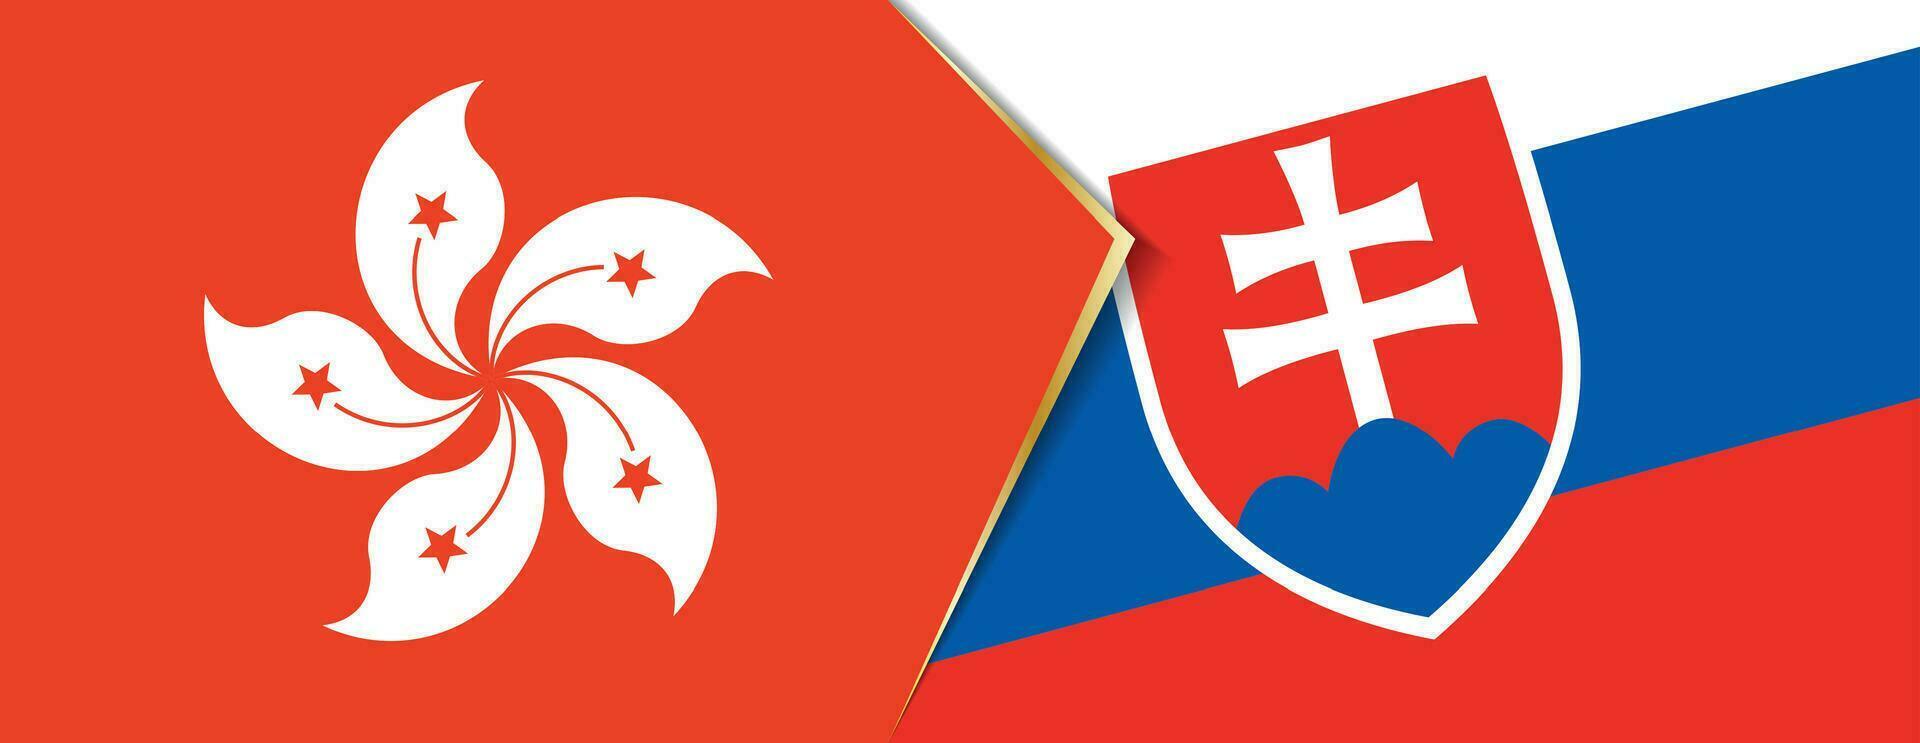 Hong Kong and Slovakia flags, two vector flags.